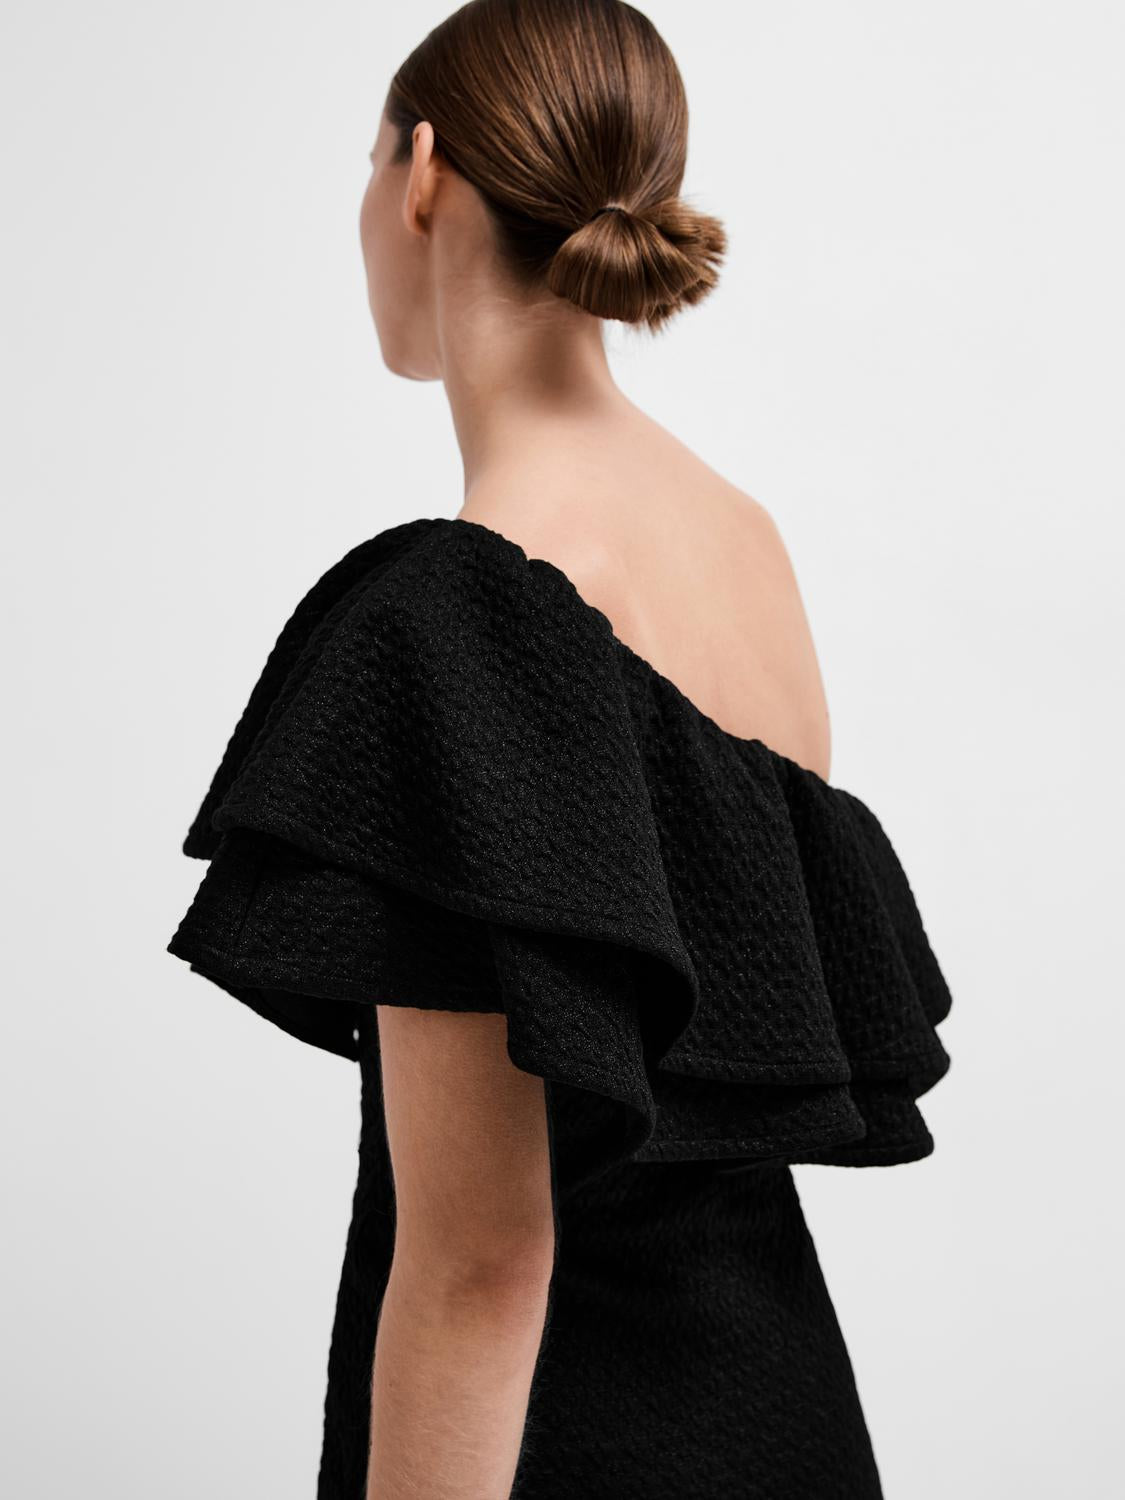 SLFIRENA Dress - Black